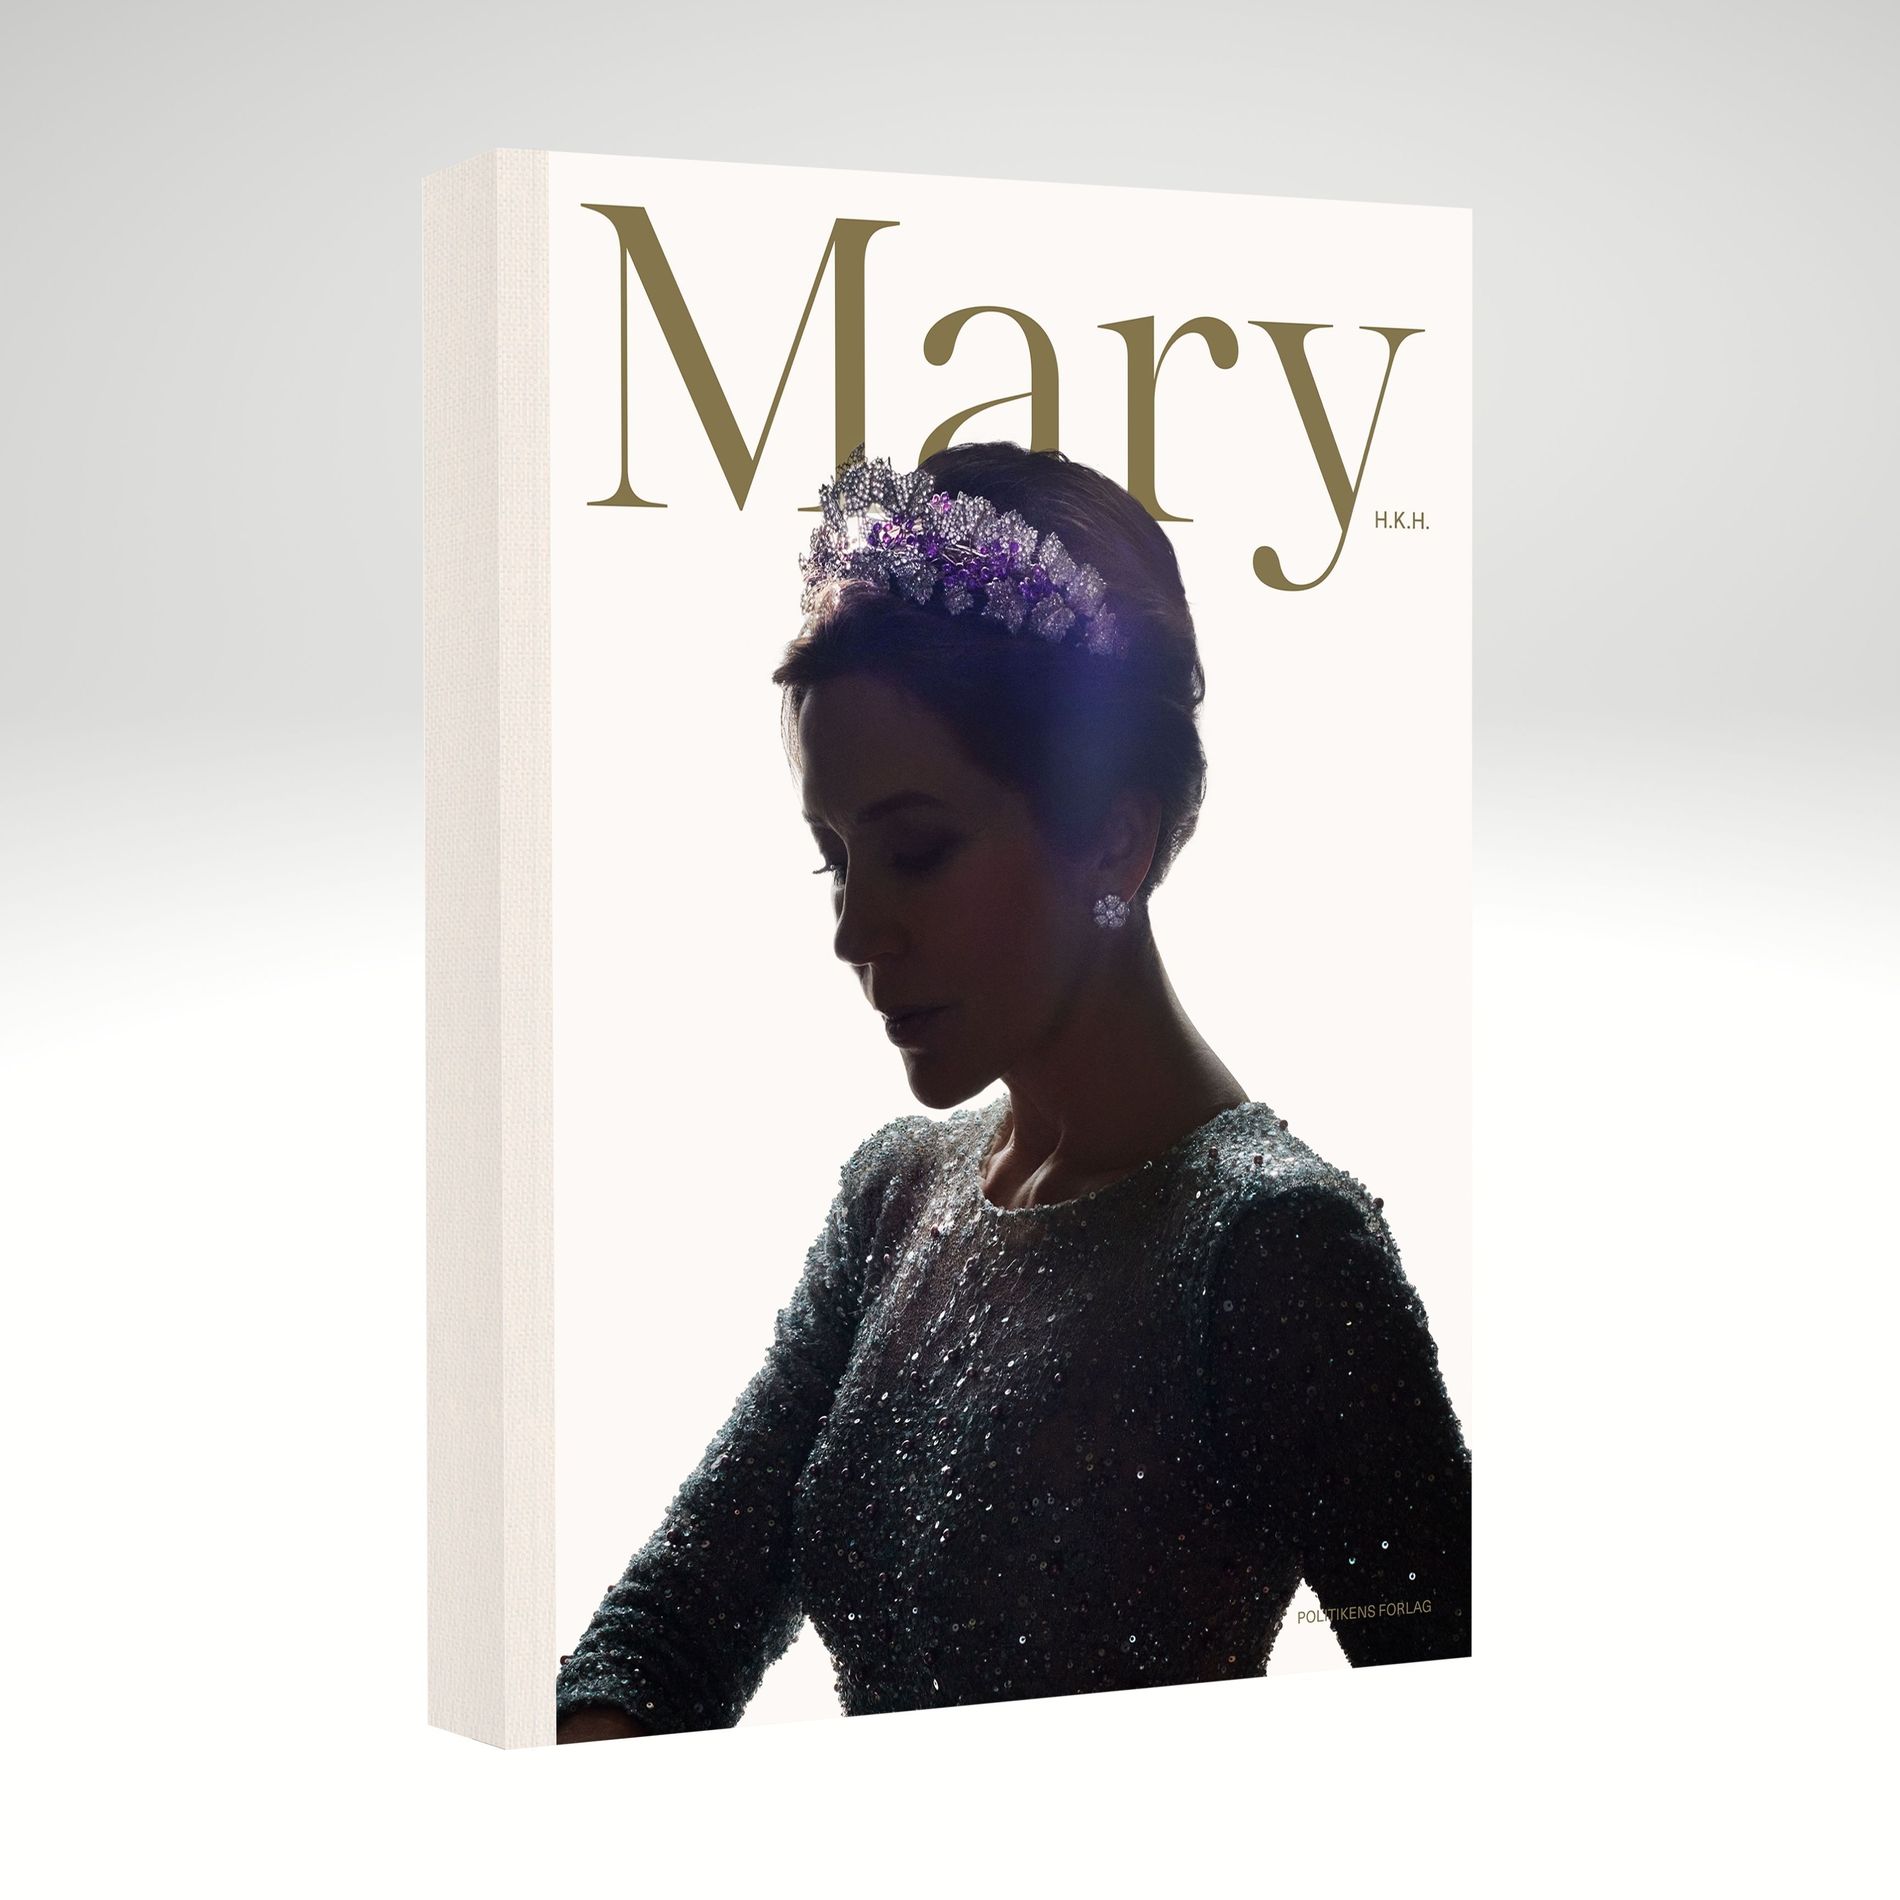 Crown princess mary of denmark book 